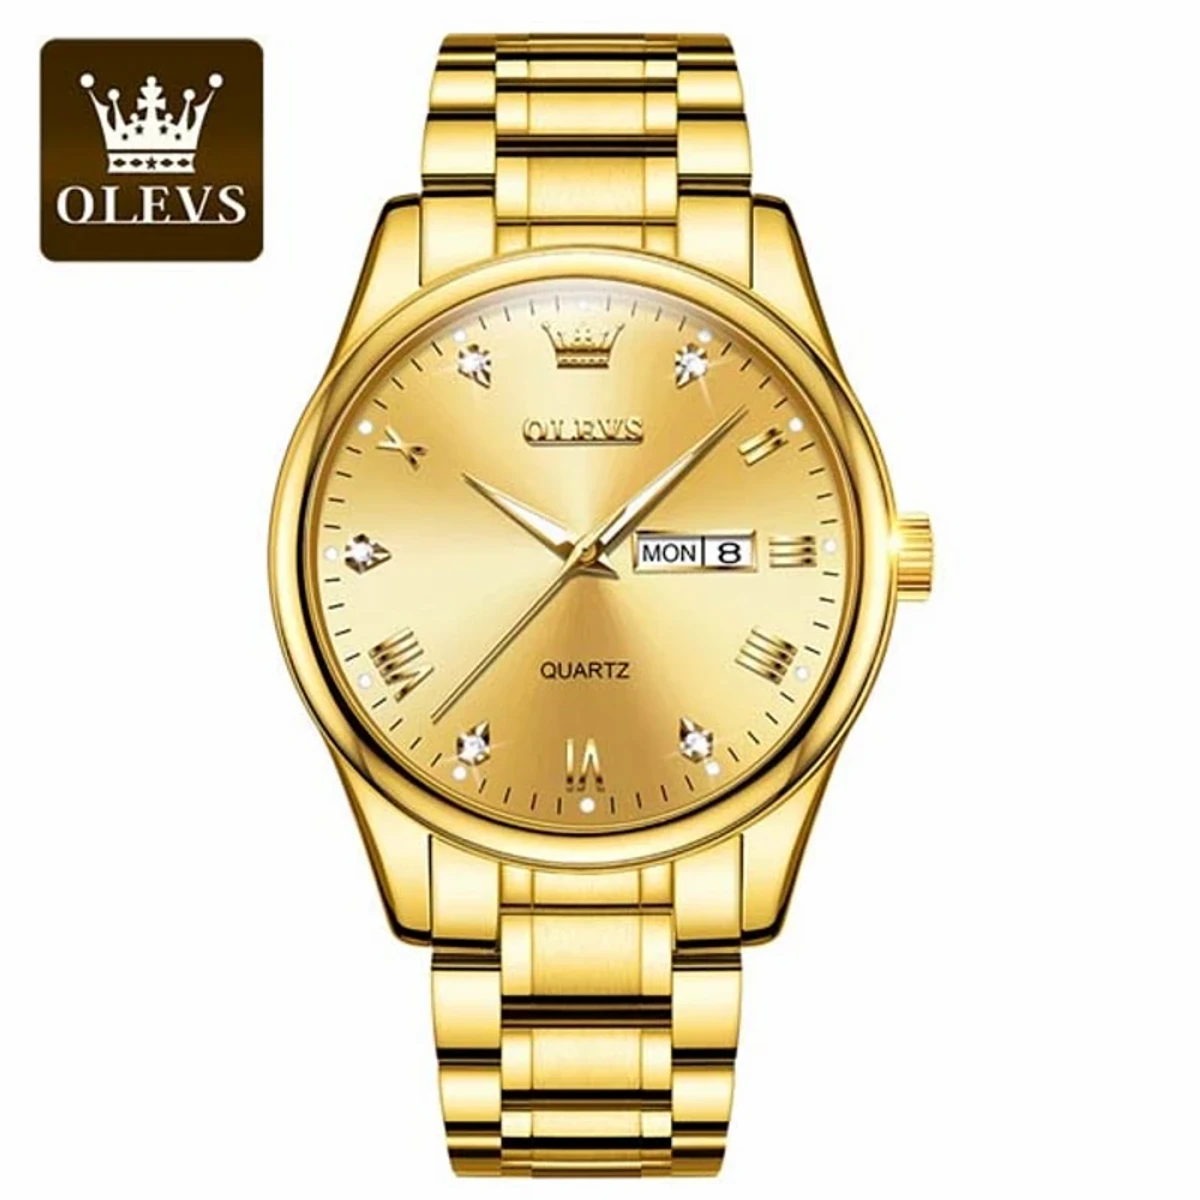 Top Brand OLEVS 5563 MODEL FULL GOLDEN  COLOURWATCH FOR MAN